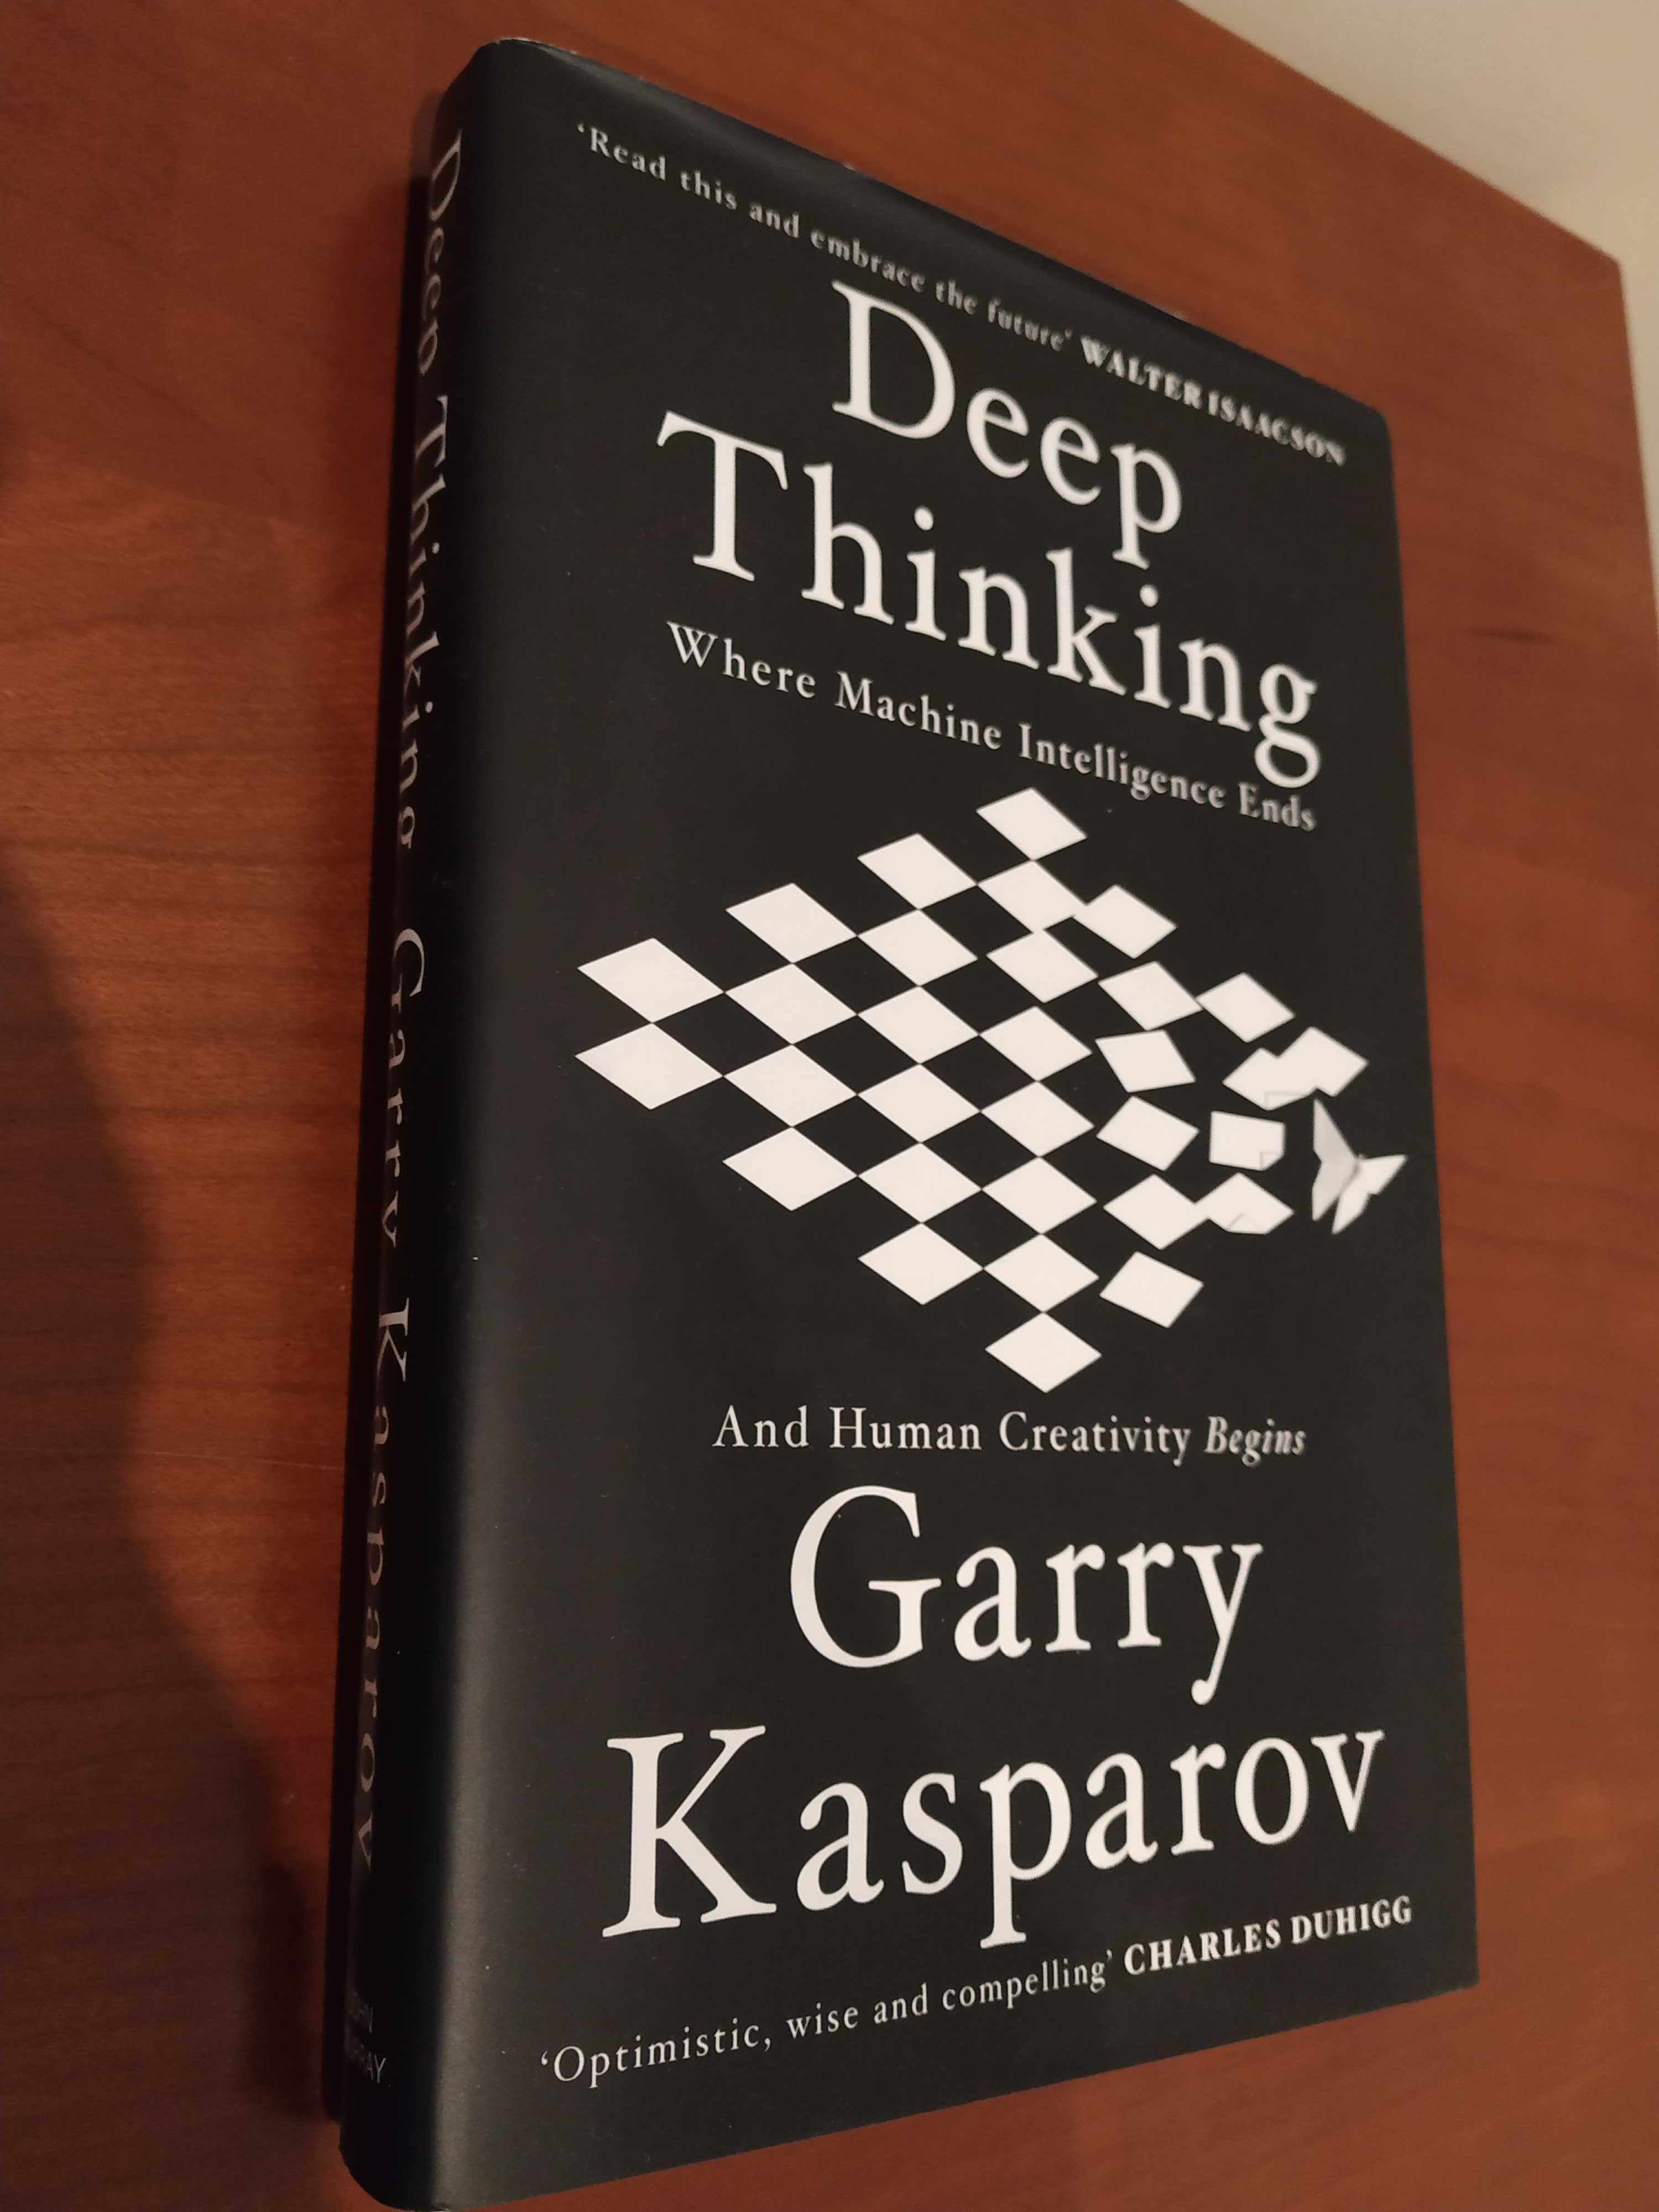 Livro "Deep Thinking" Where Machine Intelligence Ends ...